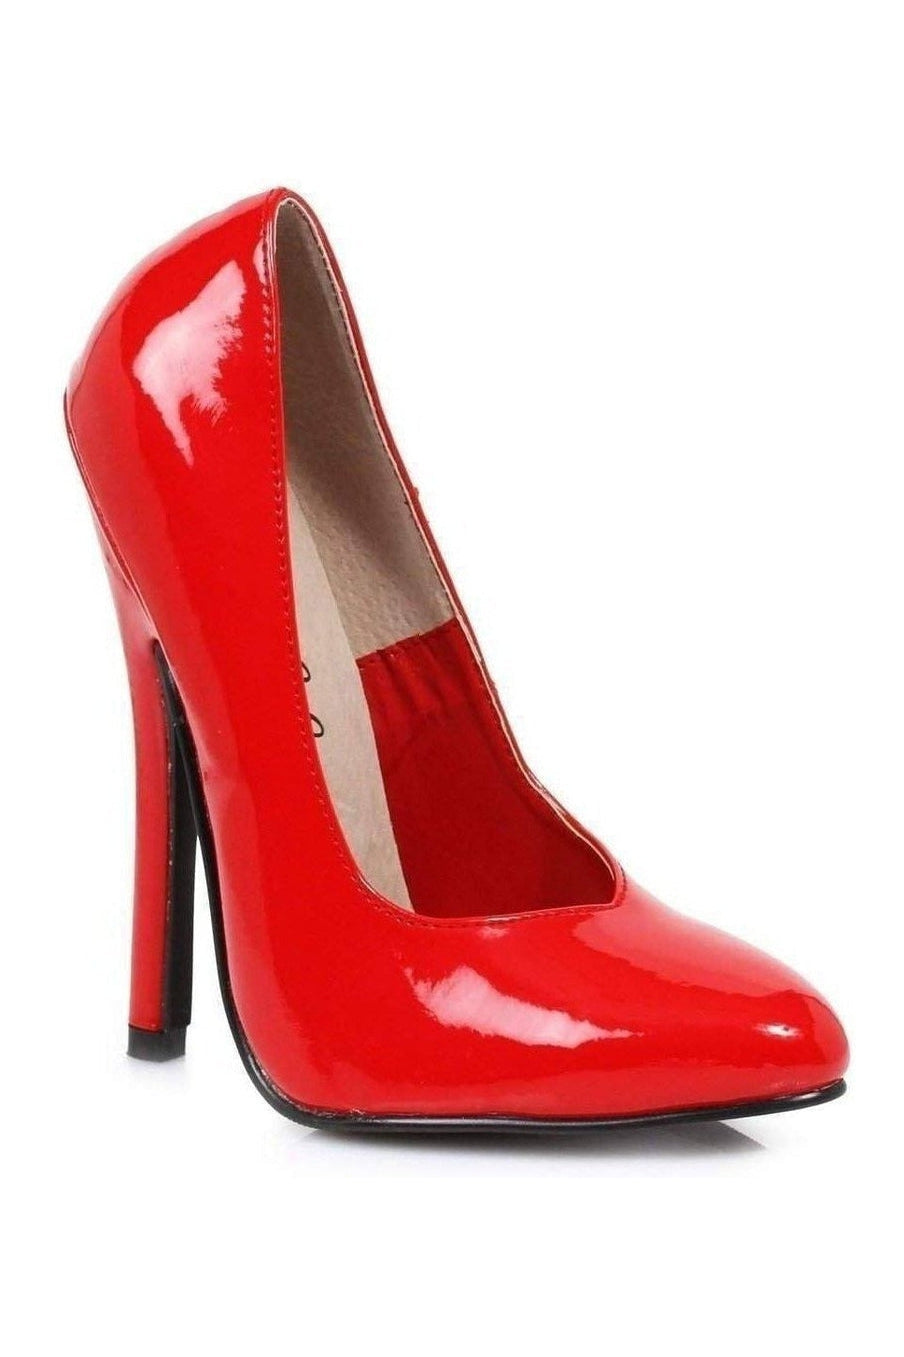 8260 Pump | Red Patent-Pumps- Stripper Shoes at SEXYSHOES.COM